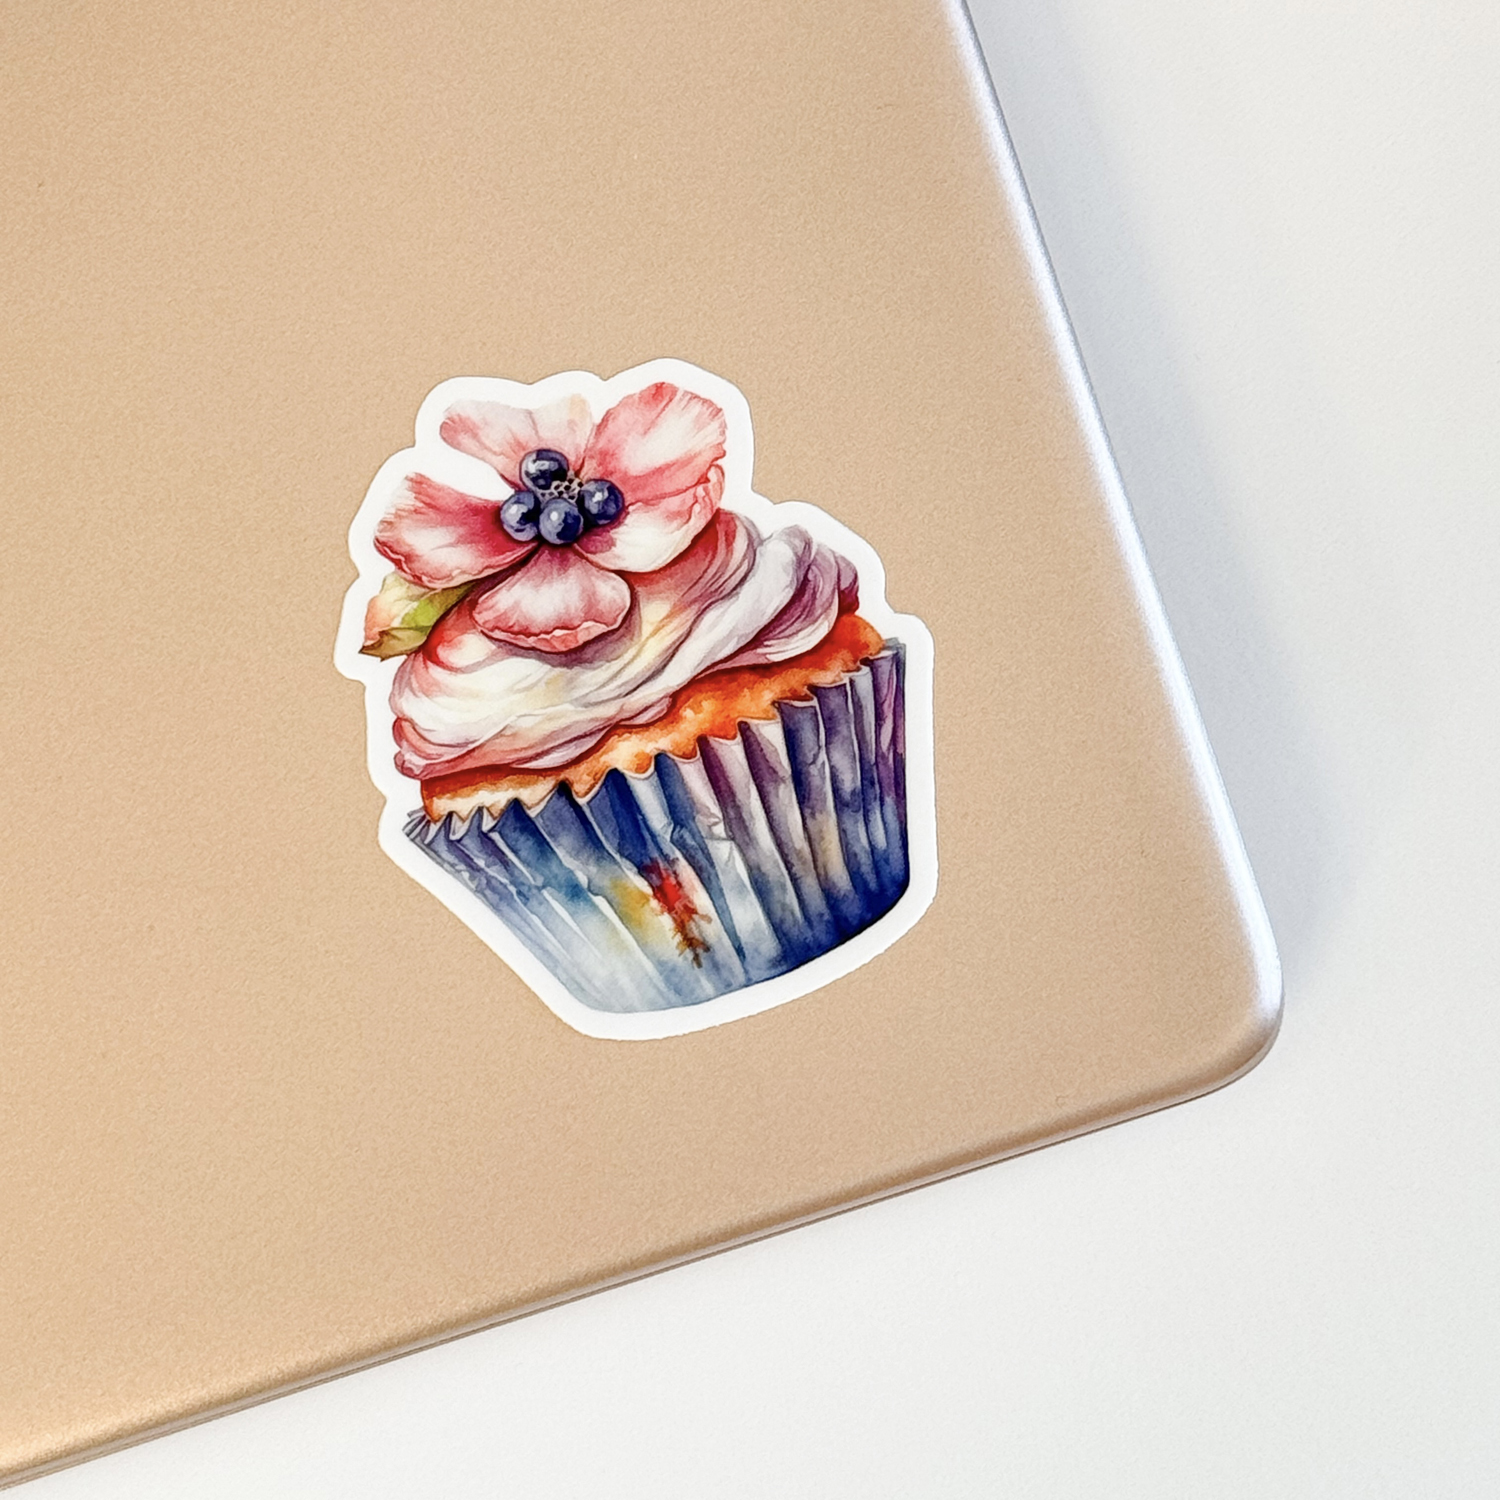 watercolor cupcake sticker on laptop lid